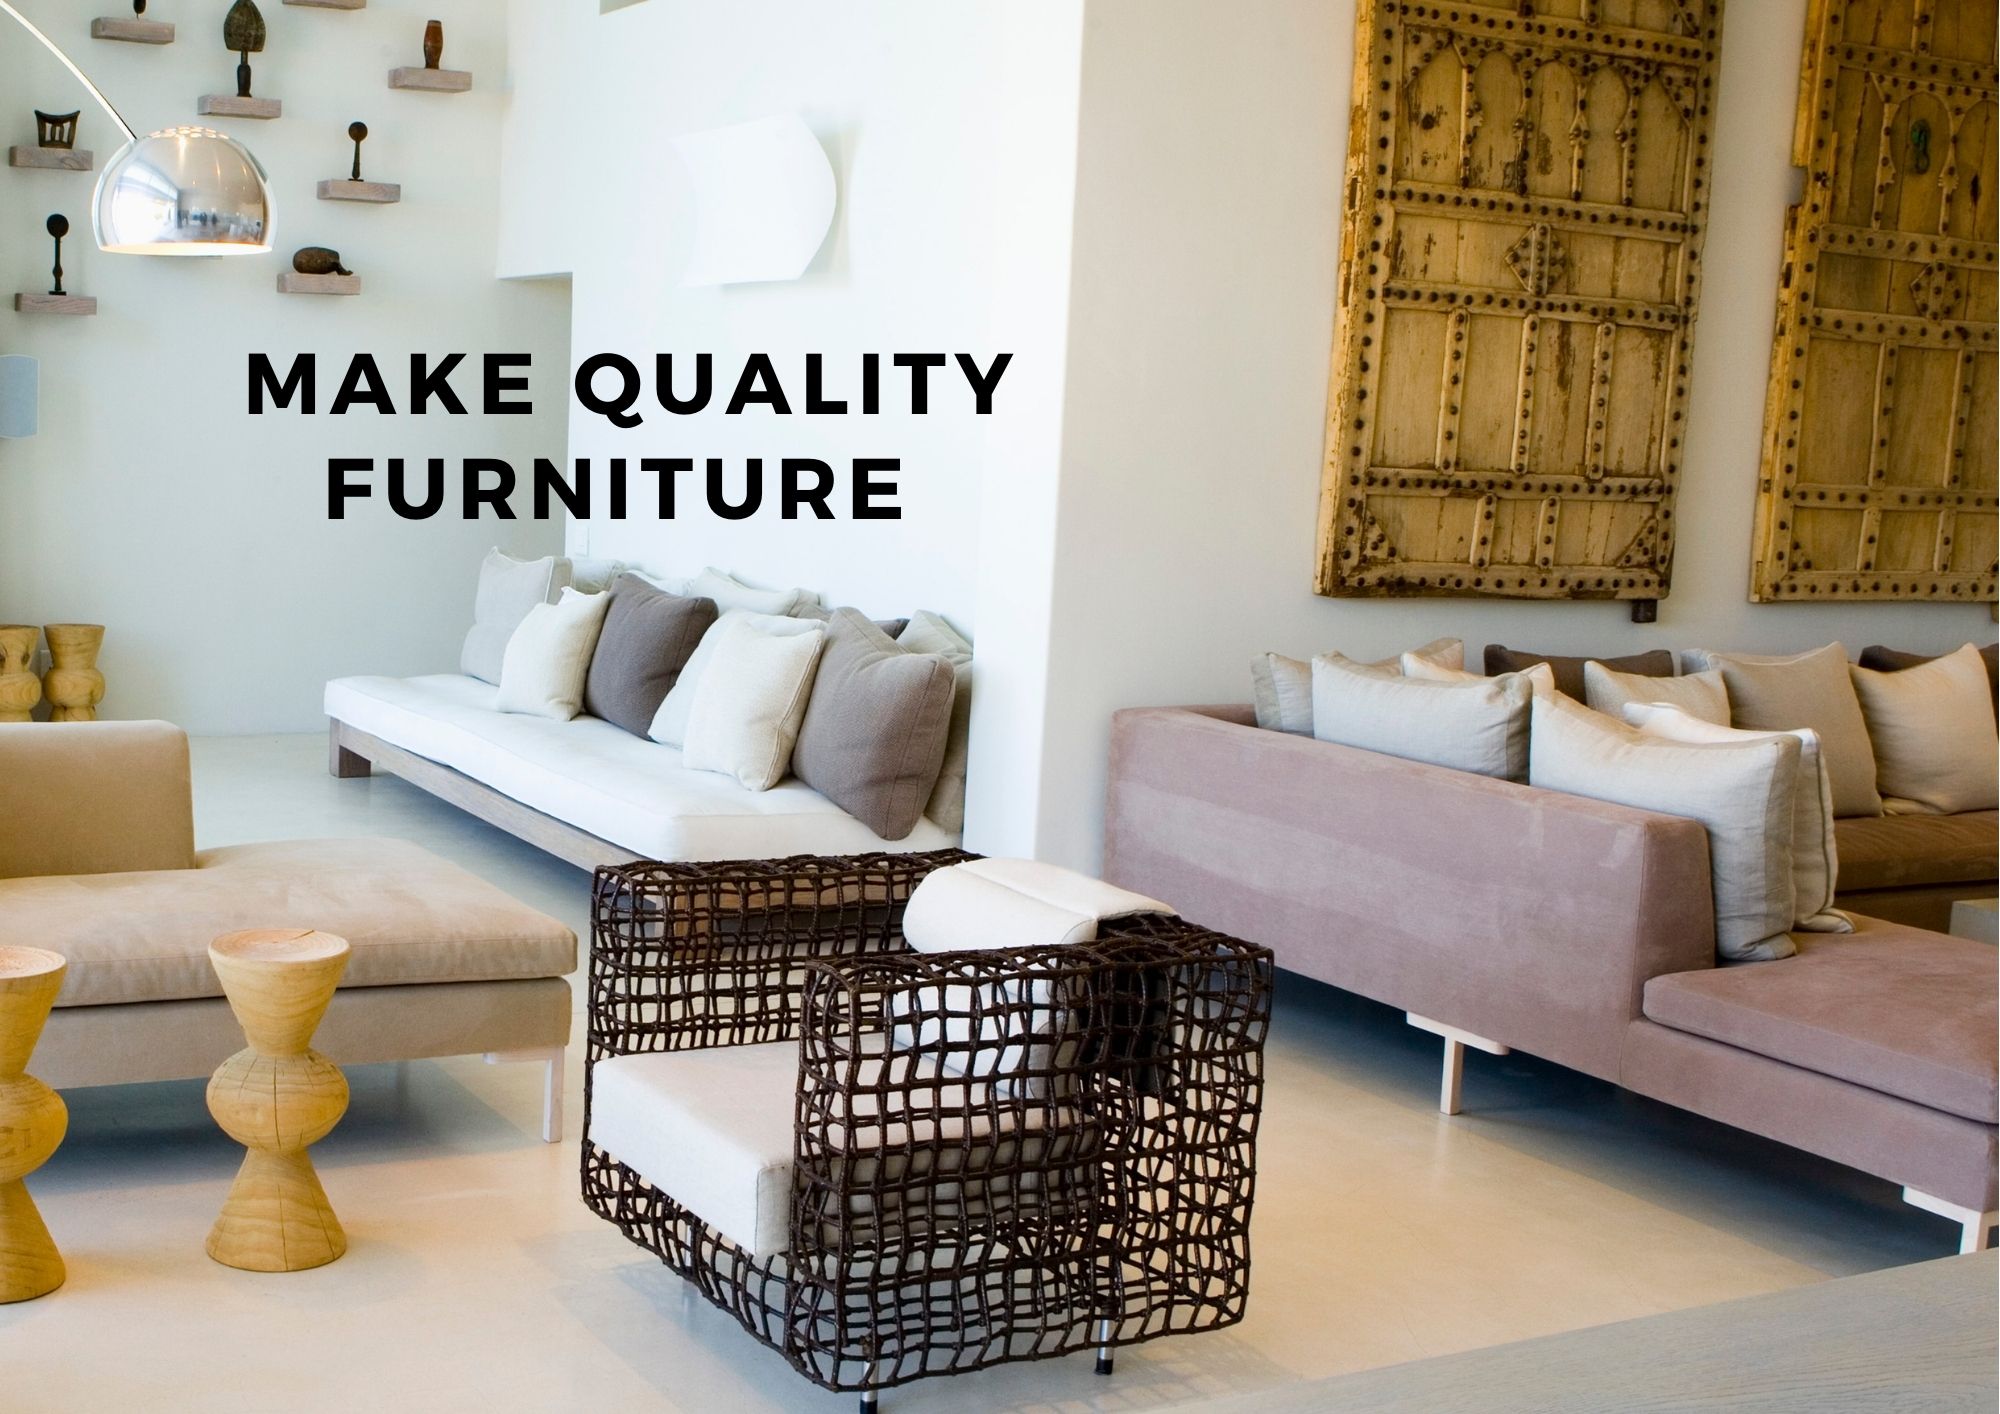 Make Quality Furniture